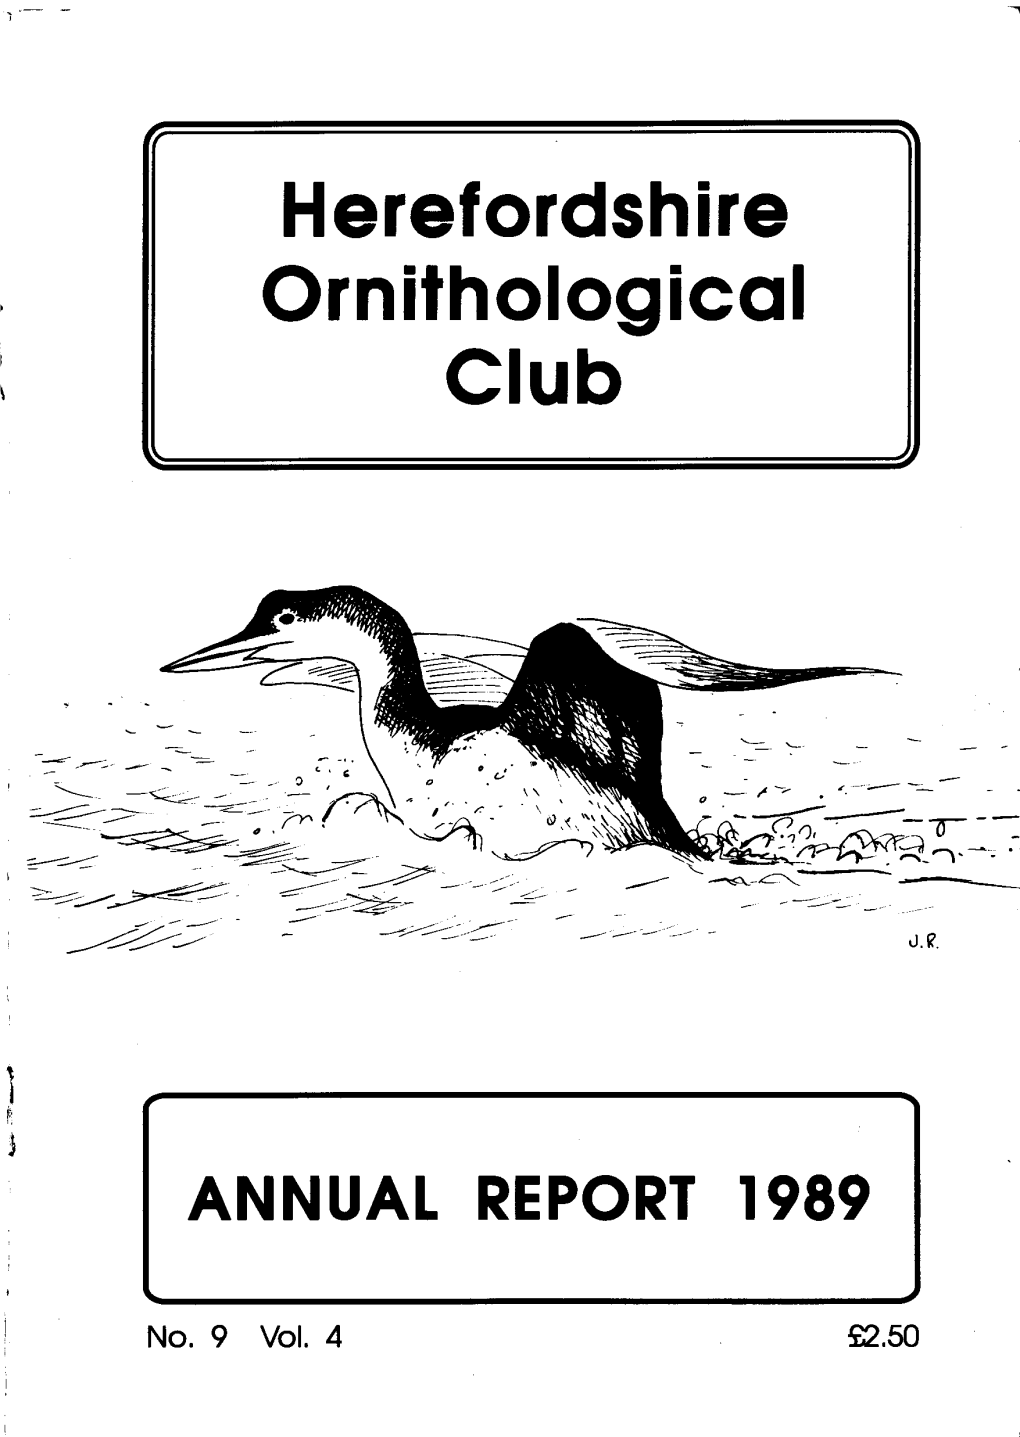 Annual Report 1989